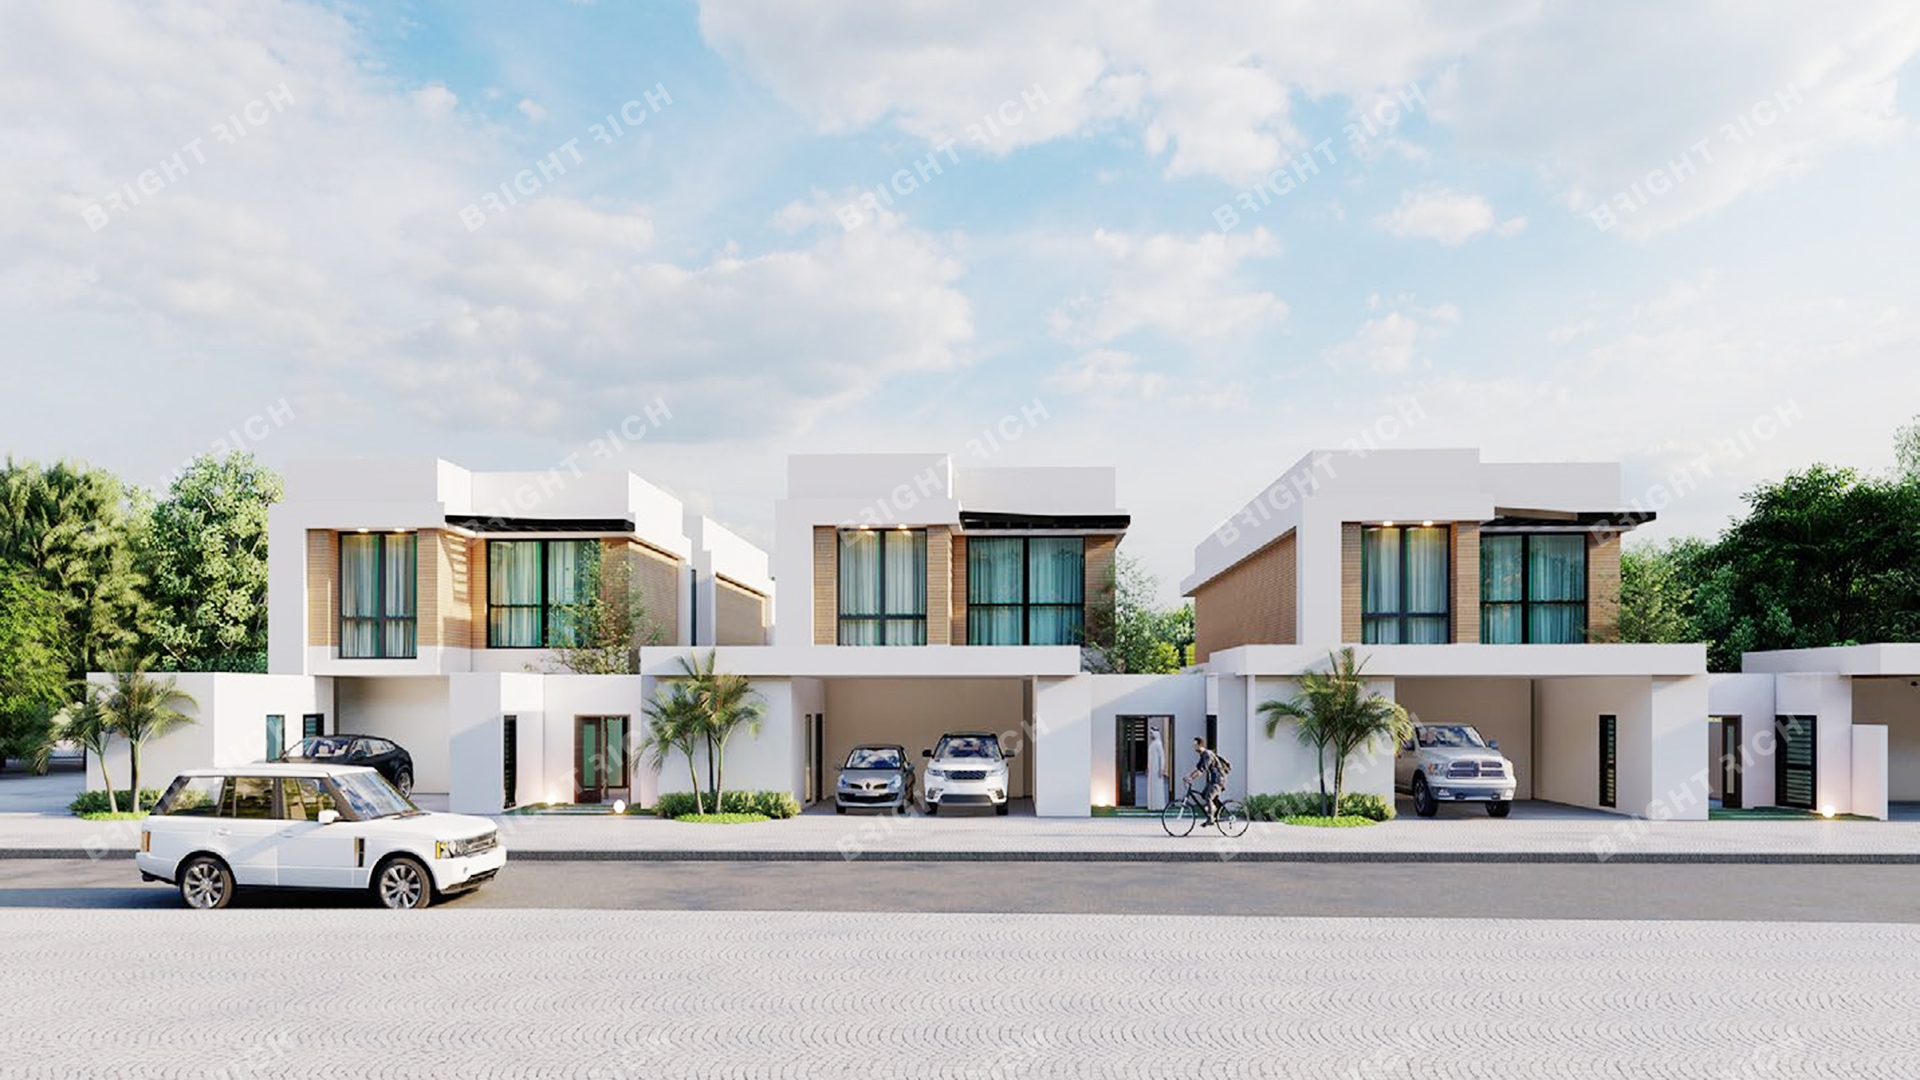 Marbella Villas 2, apart complex in Ras Al Khaimah - 2